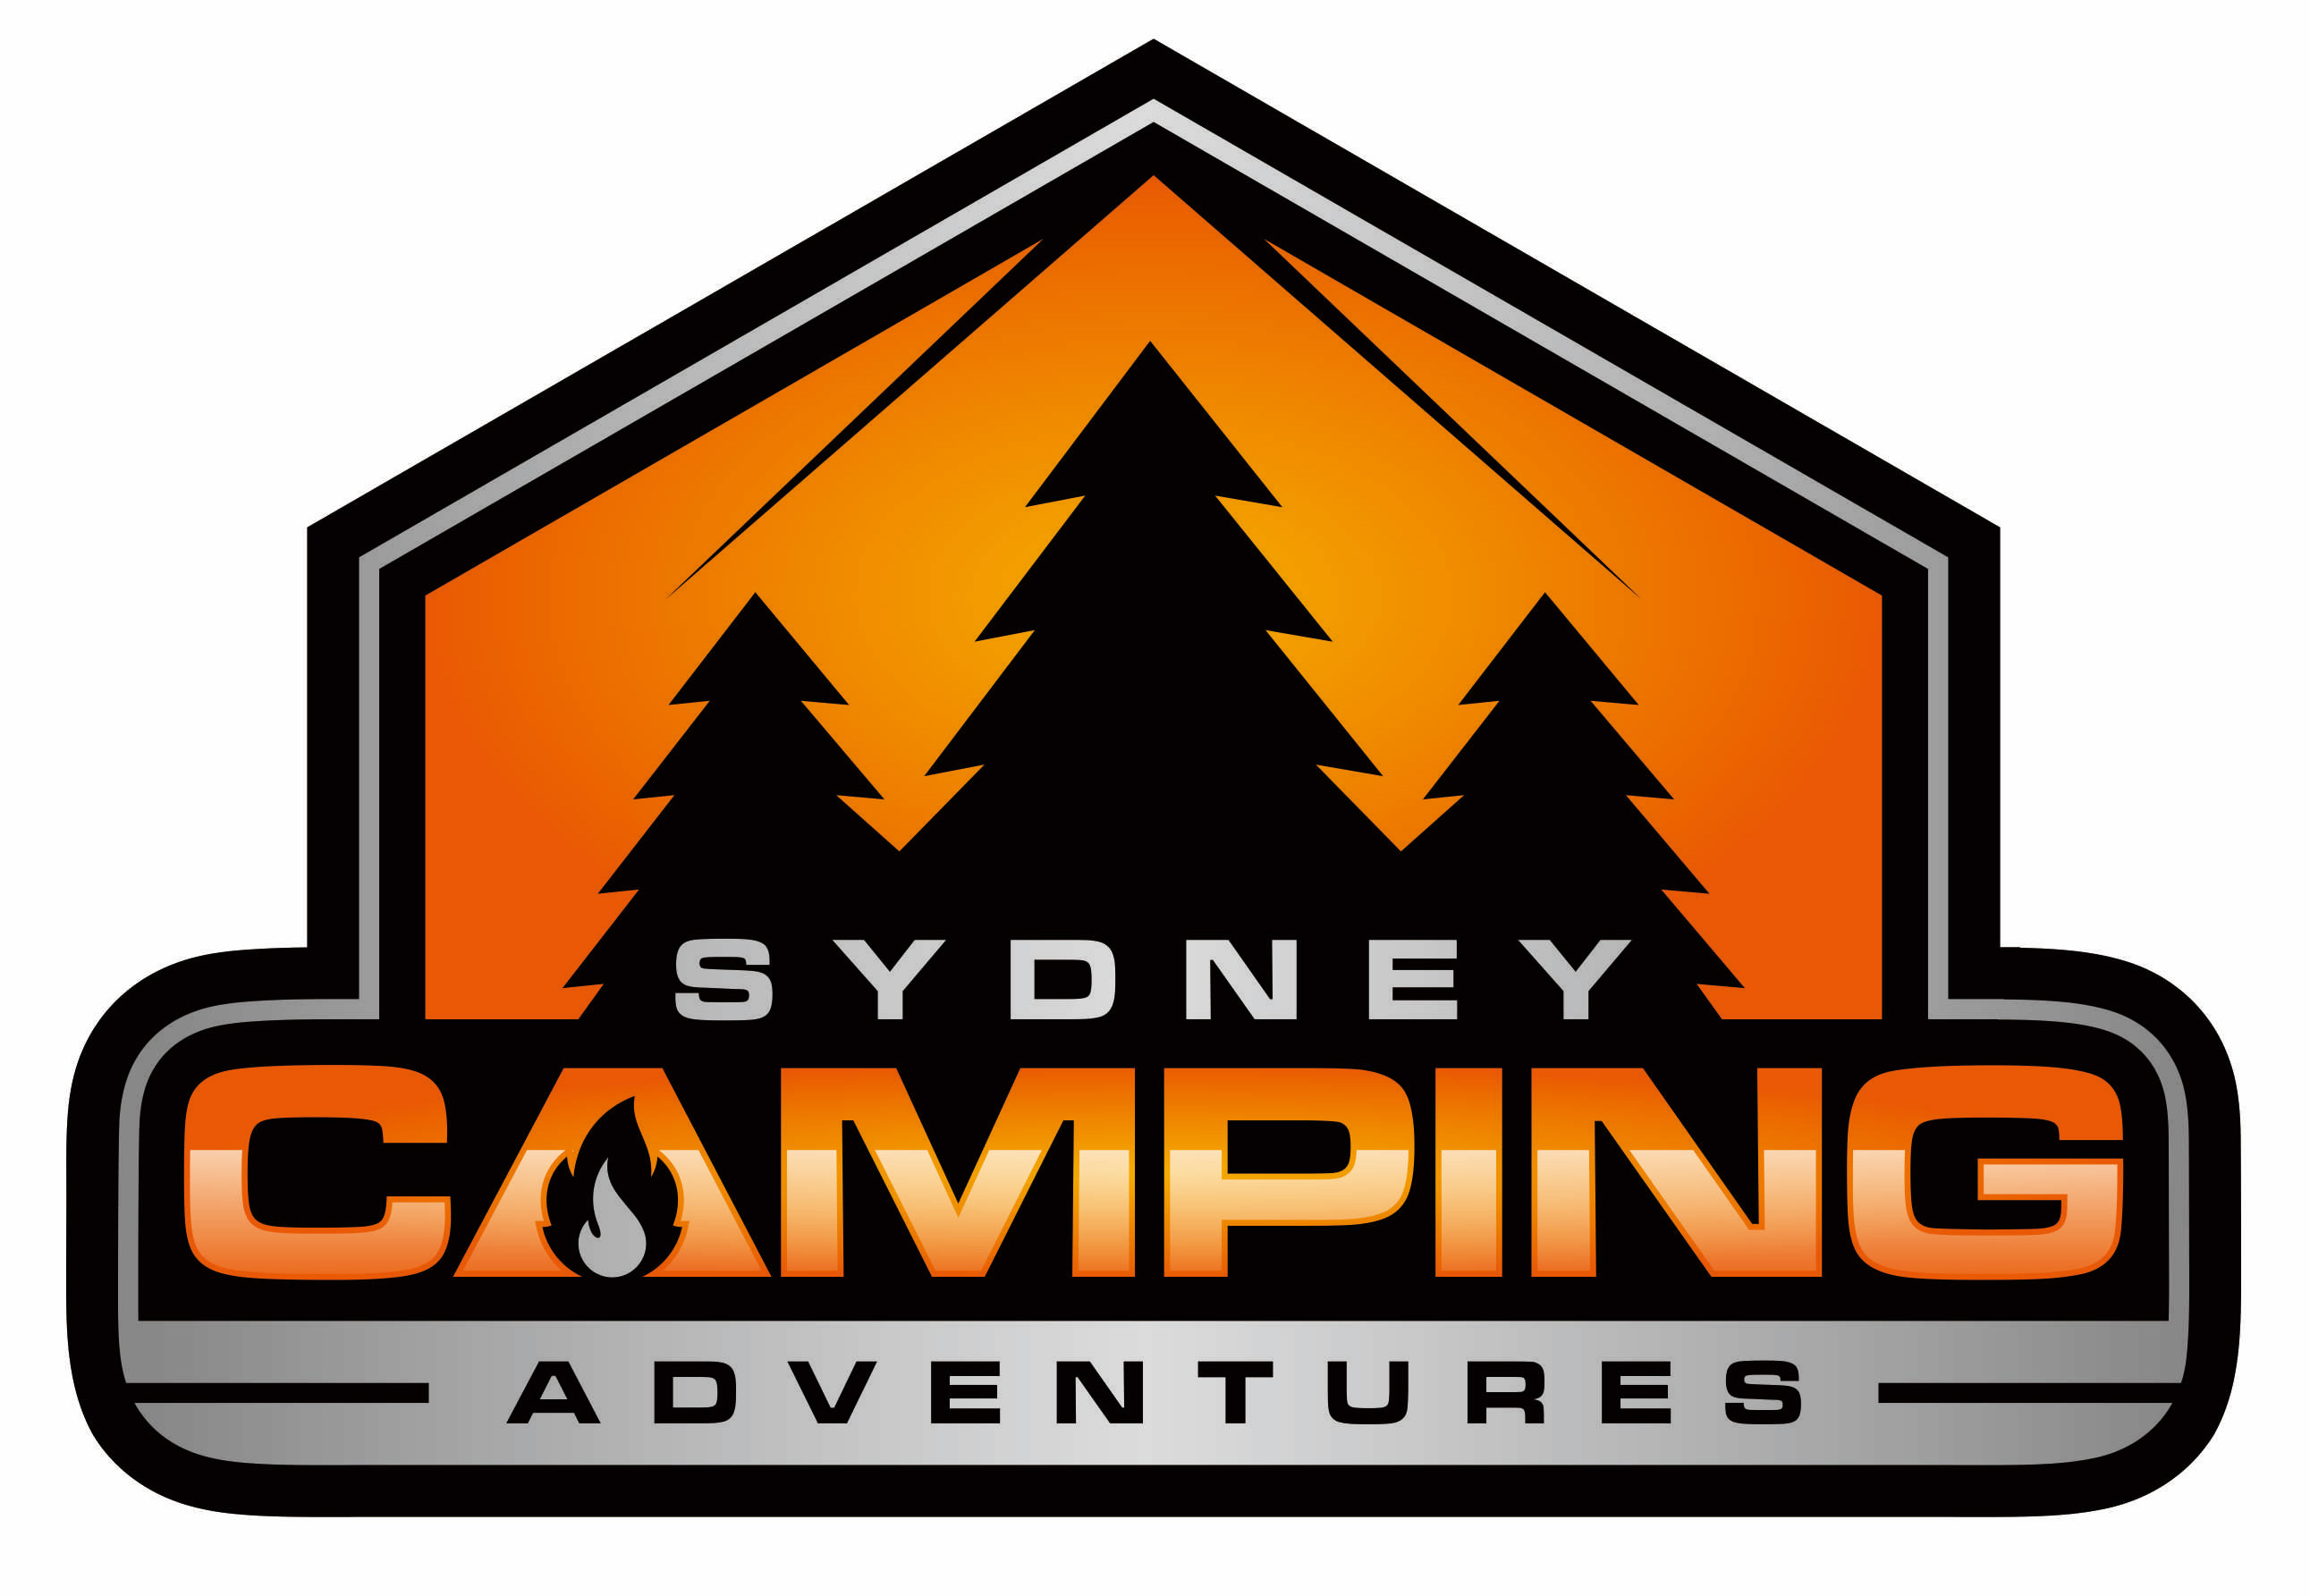 Sydney Camping Adventures logo. Photo &copy; Sydney Camping Adventures